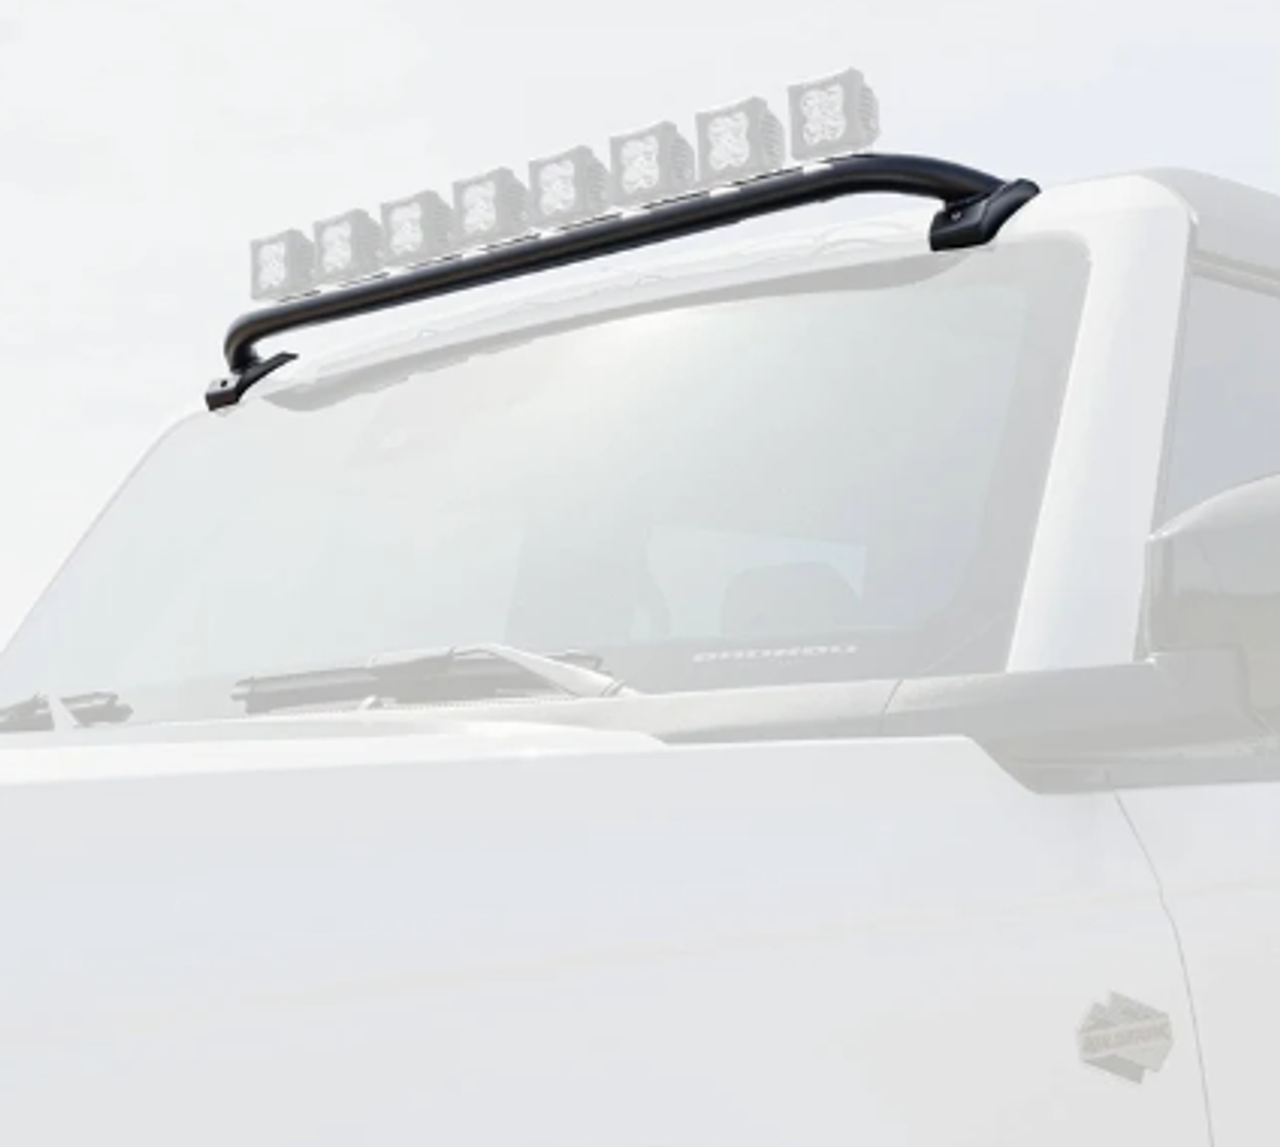 ZROADZ Z935401 Front Roof Tubular Mounting Bar Bracket for Ford Bronco 2021+